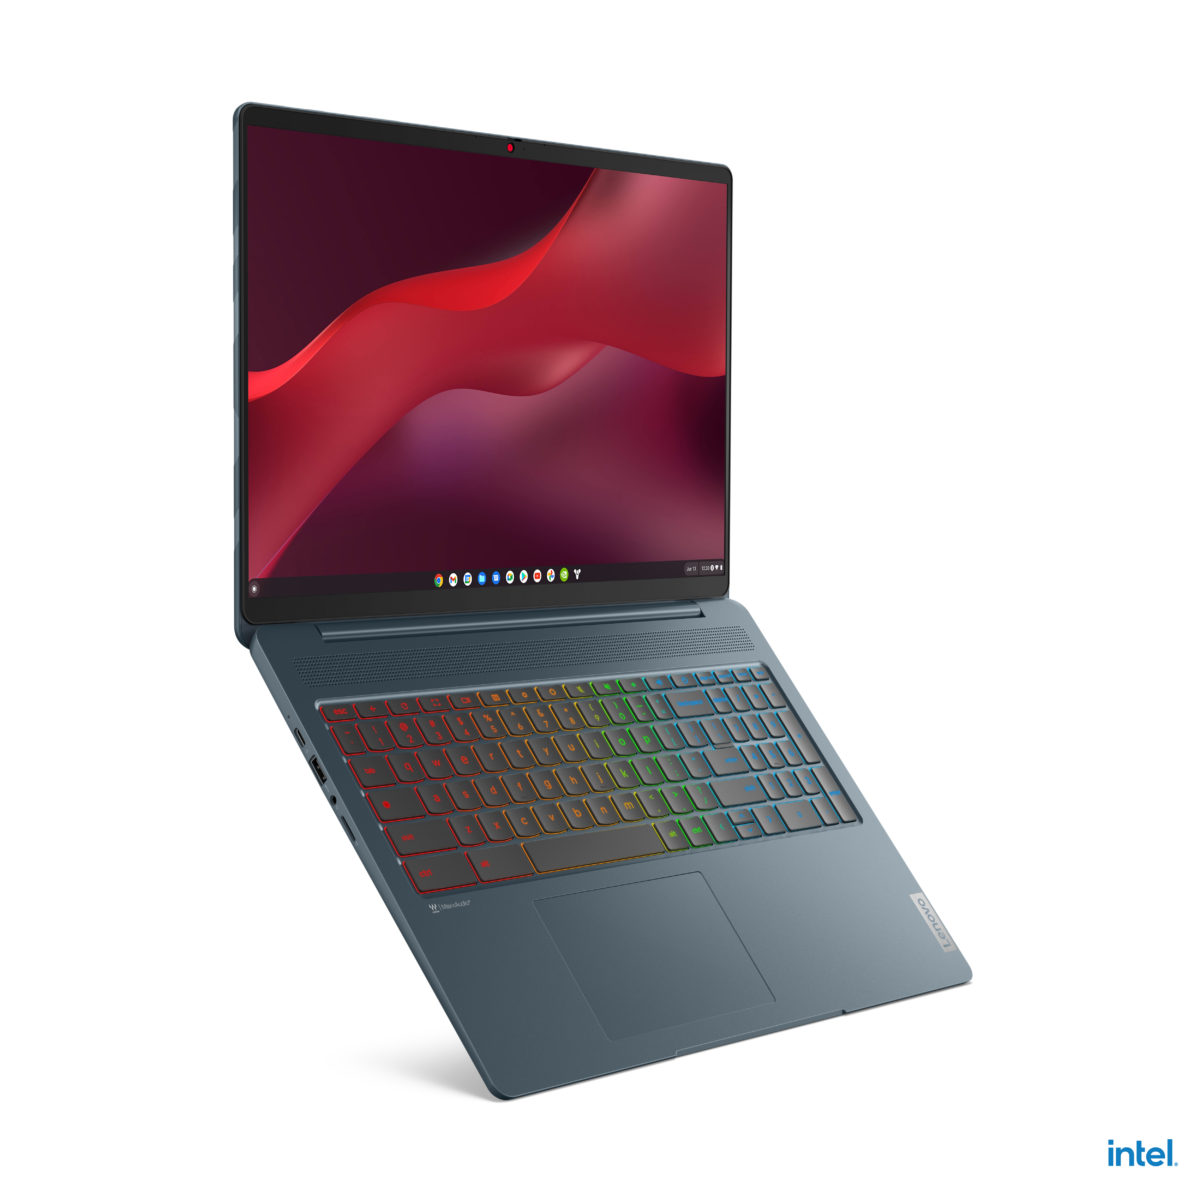 Lenovo IdeaPad Chromebook, un portátil pensado para jugar en Internet 1